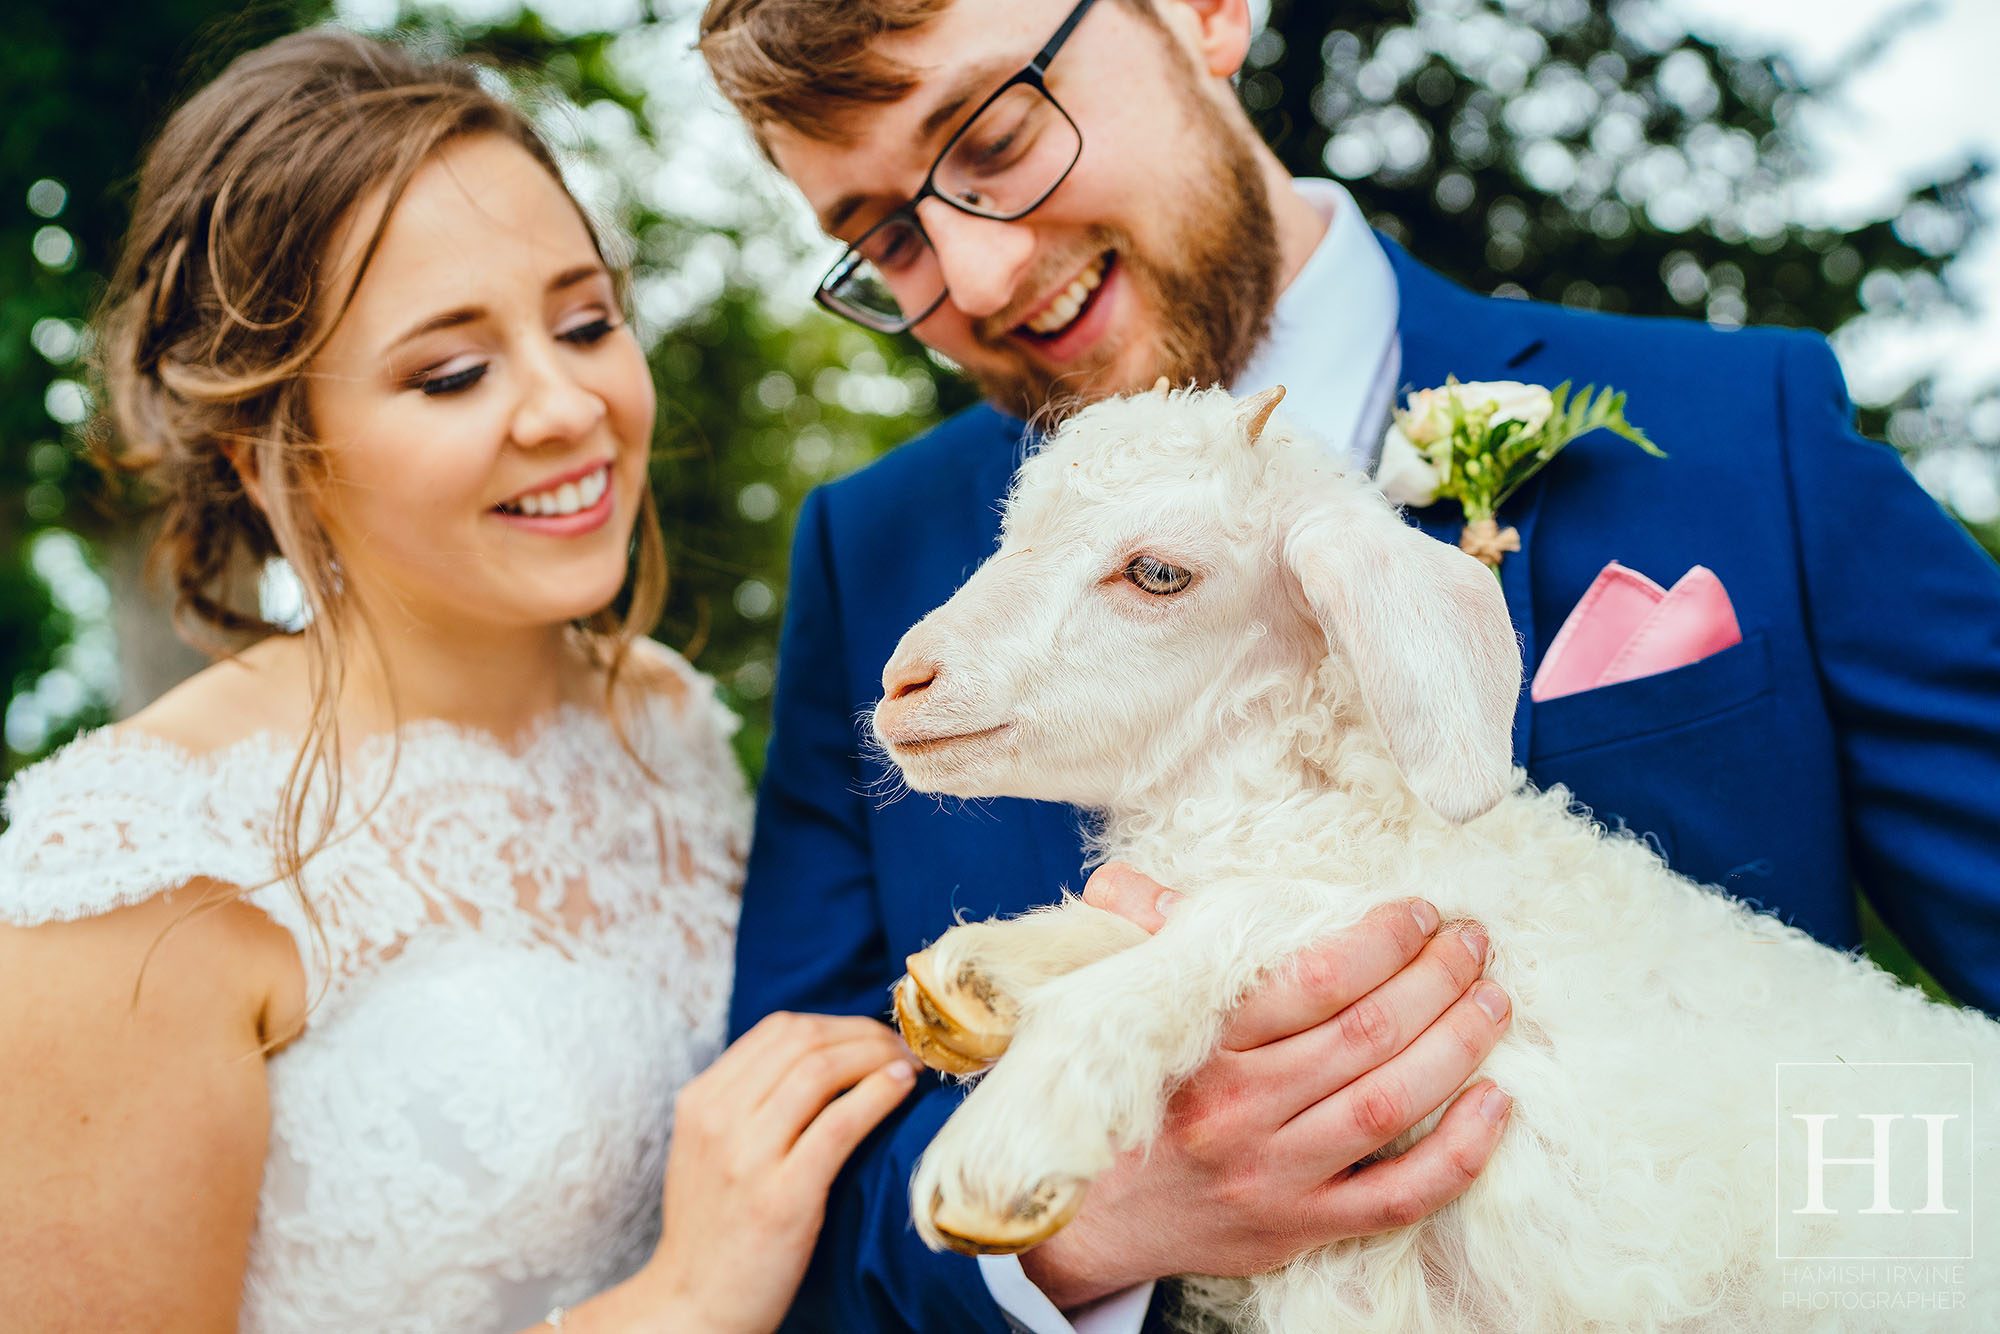 hornington manor sheep wedding photos hamish irvine